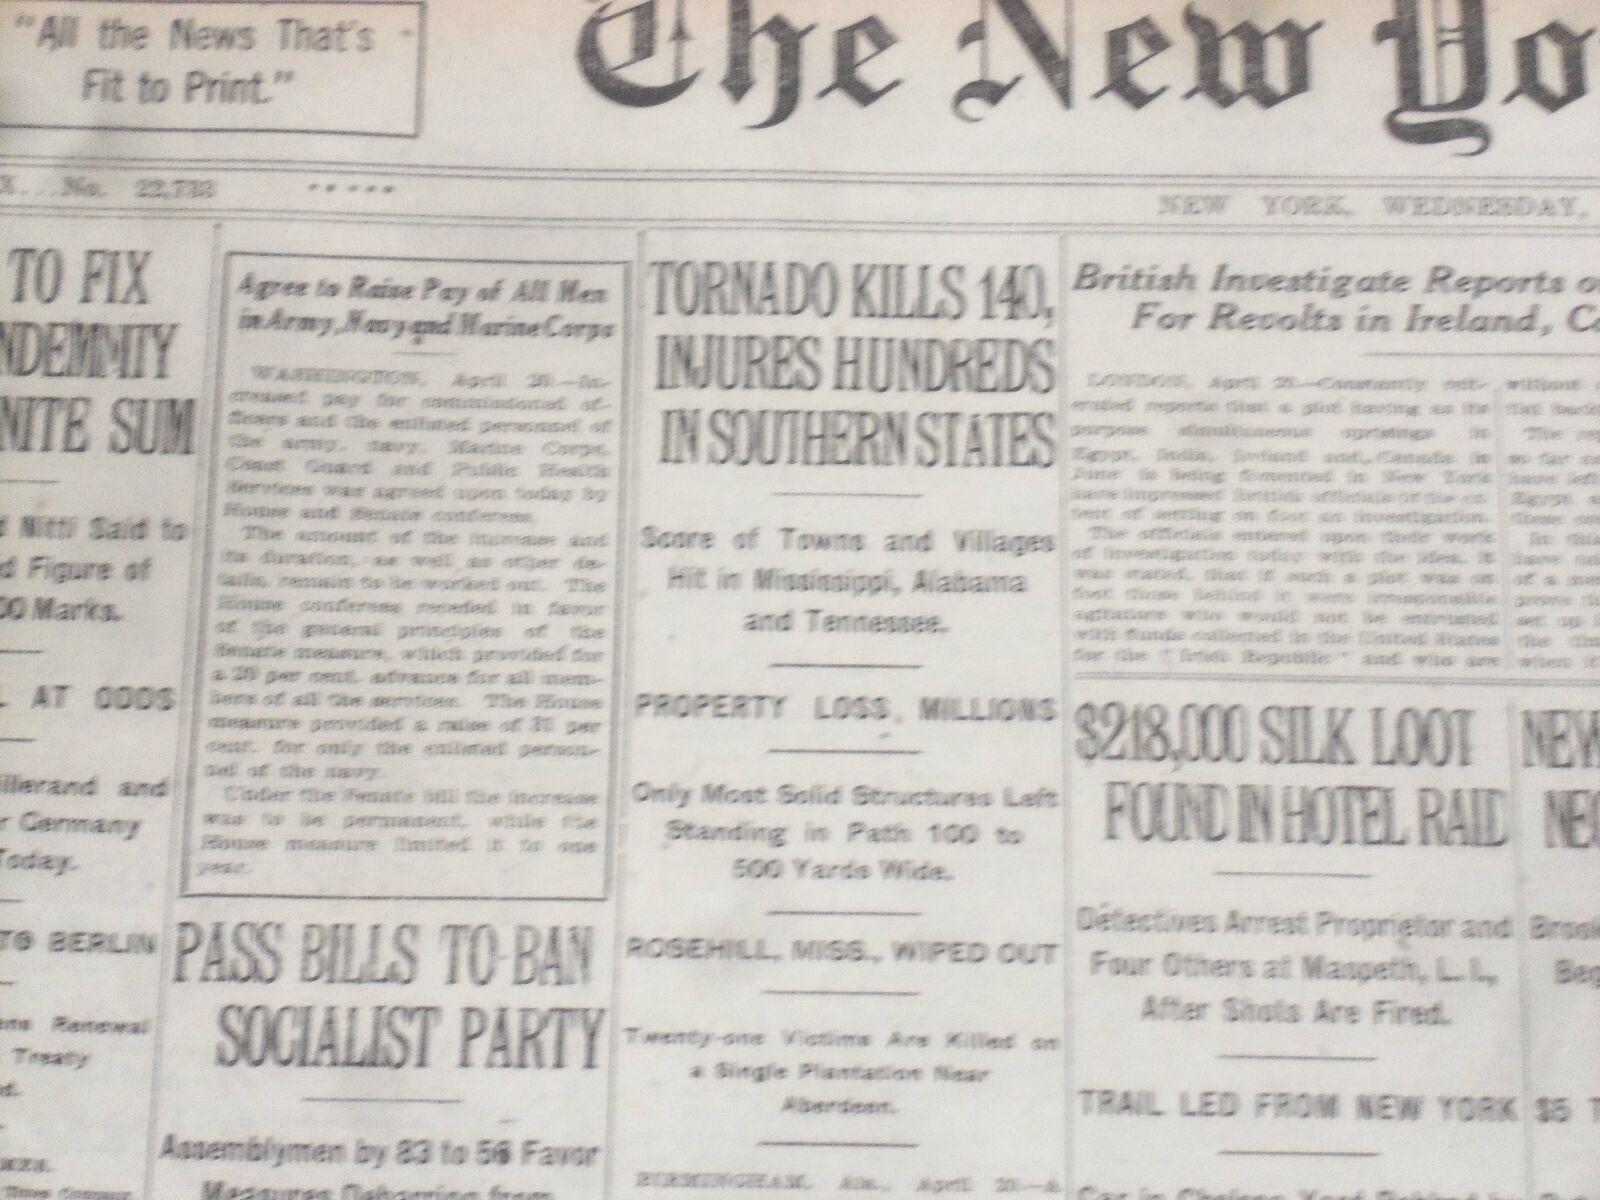 1920 APRIL 21 NEW YORK TIMES - TORNADO KILLS 140 IN SOUTHERN STATES - NT 8298